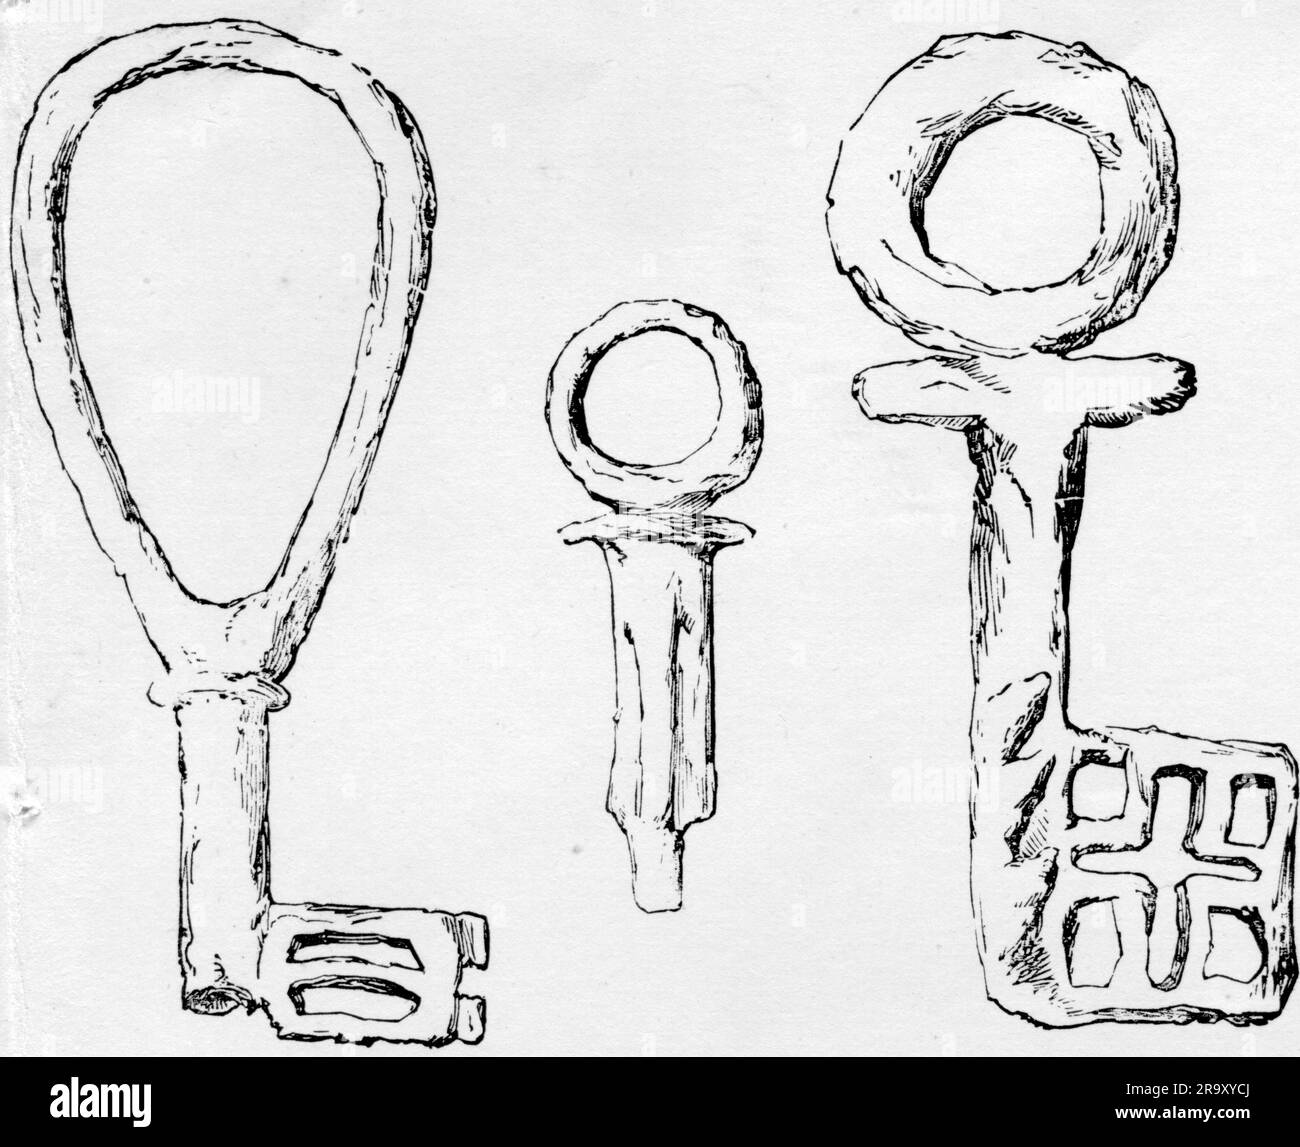 technics, locks and keys, three Roman keys from Pompeii and Herculaneum, 1st century, British Museum, ARTIST'S COPYRIGHT HAS NOT TO BE CLEARED Stock Photo